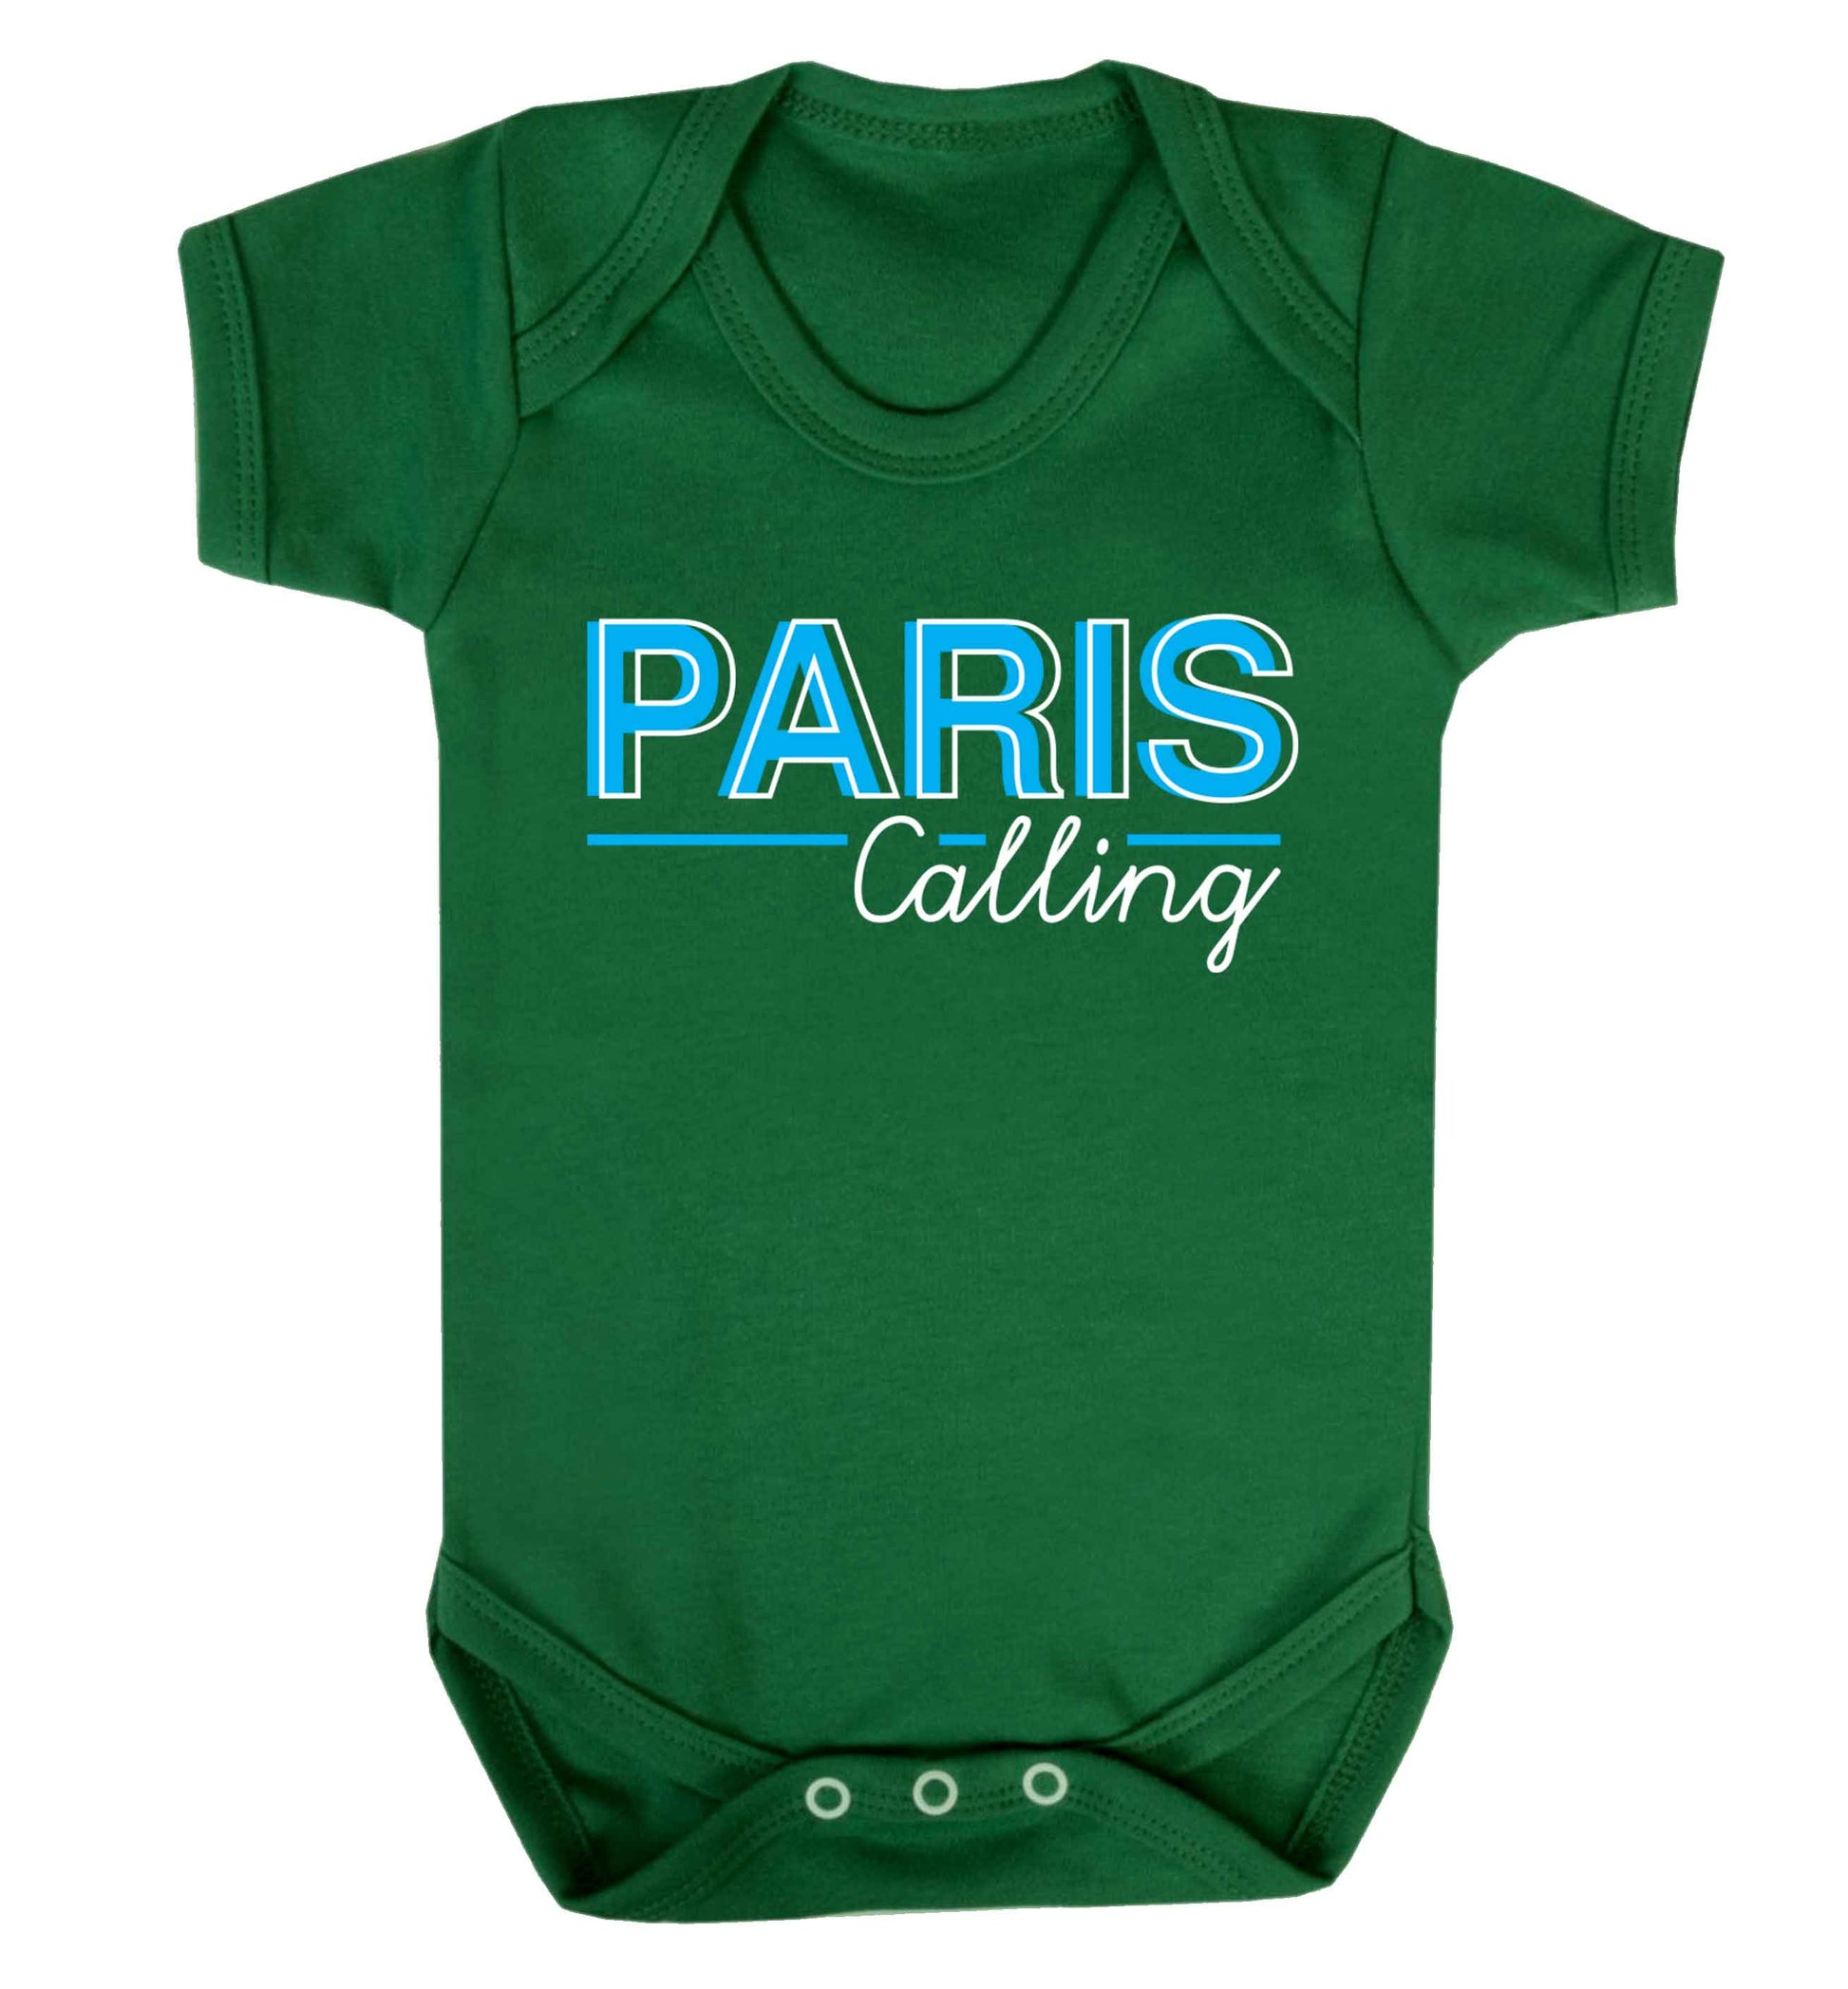 Paris calling Baby Vest green 18-24 months